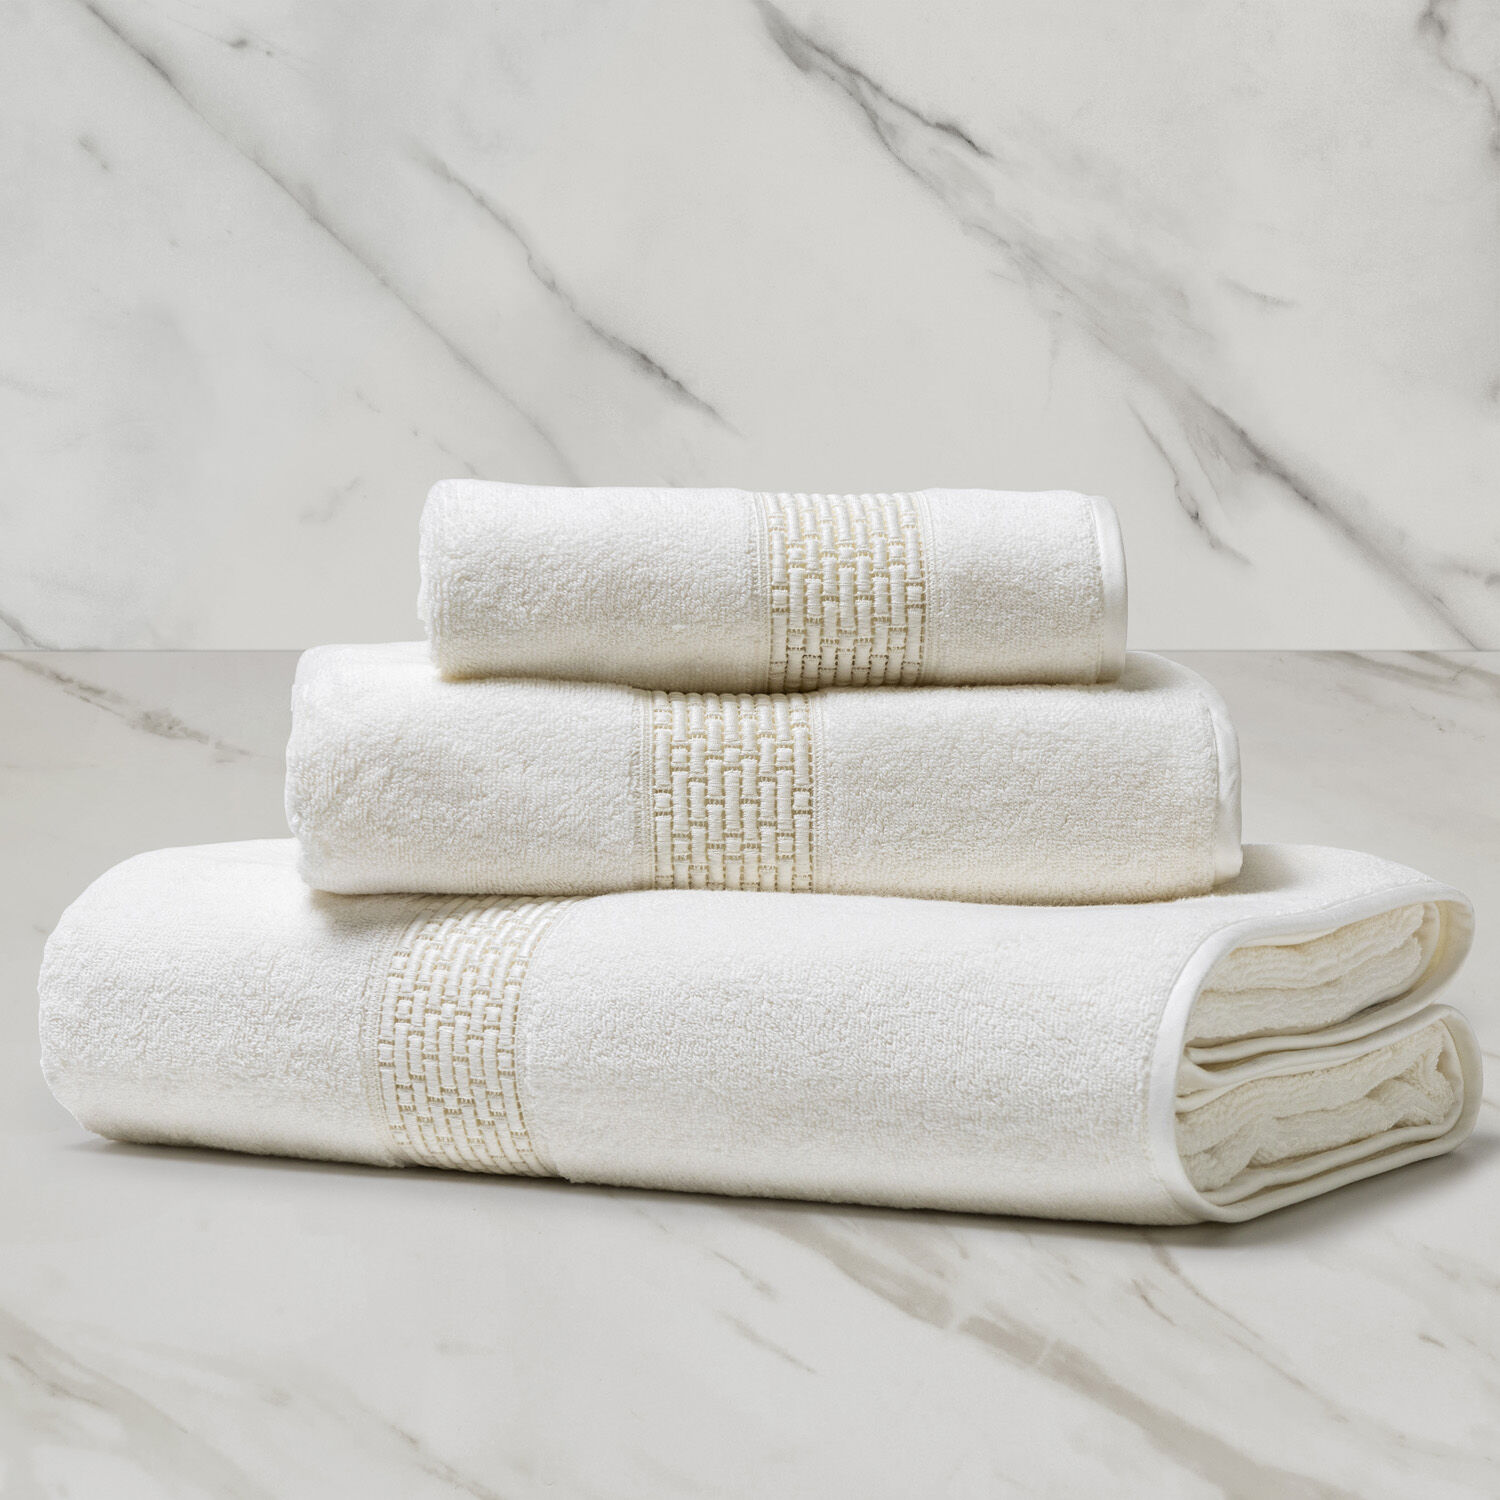 Affinity Lace Bath Towel